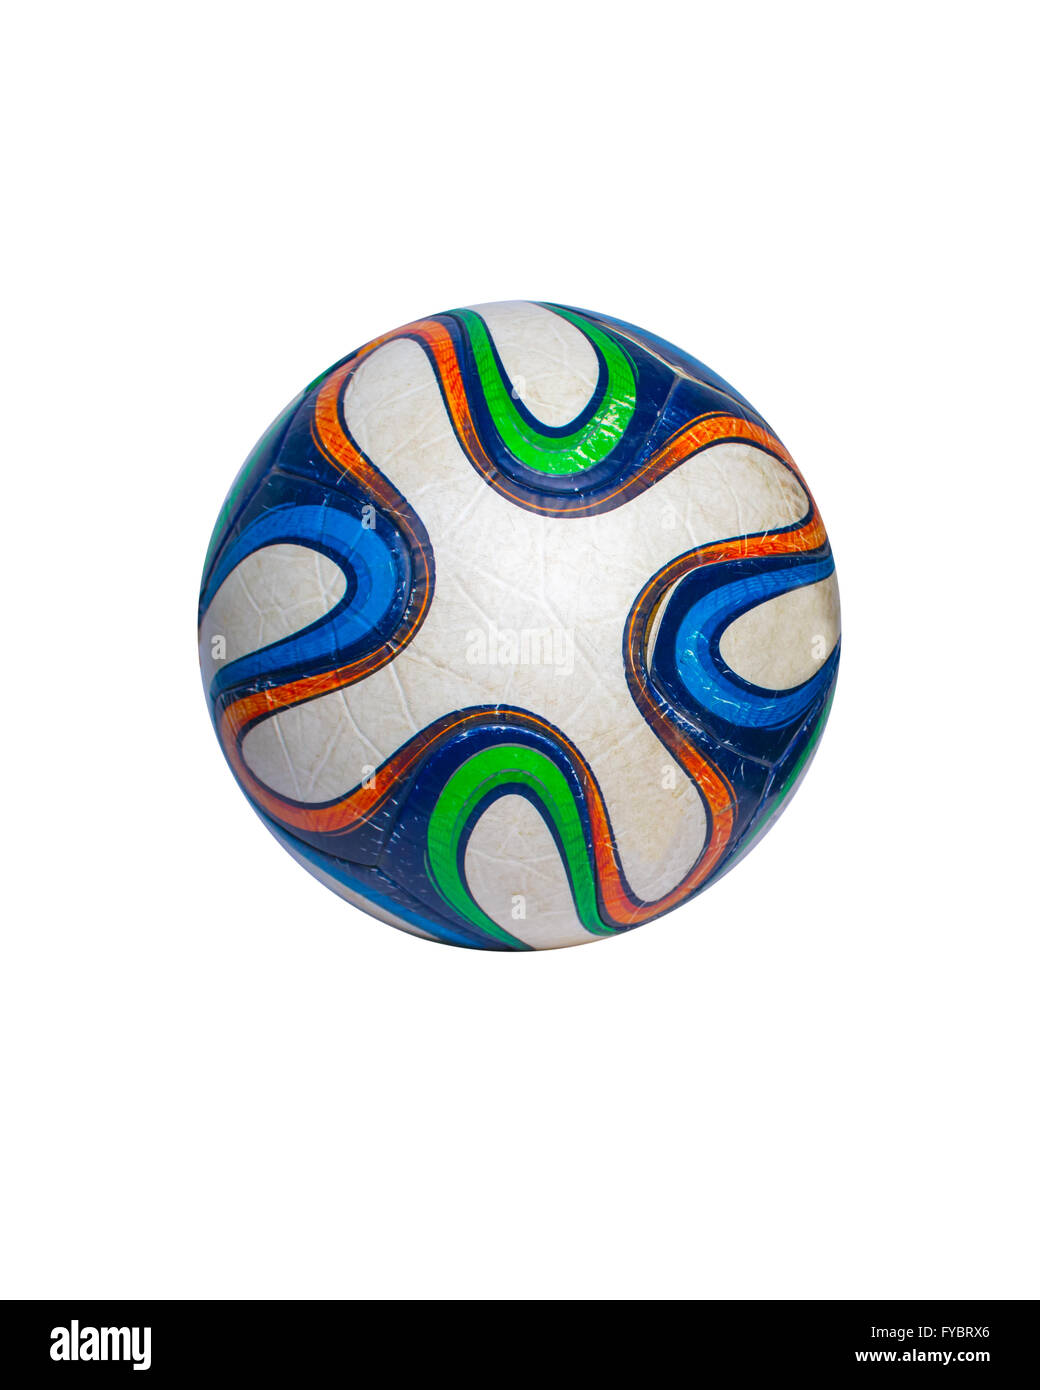 Ball. Isolated on white background. Stock Photo